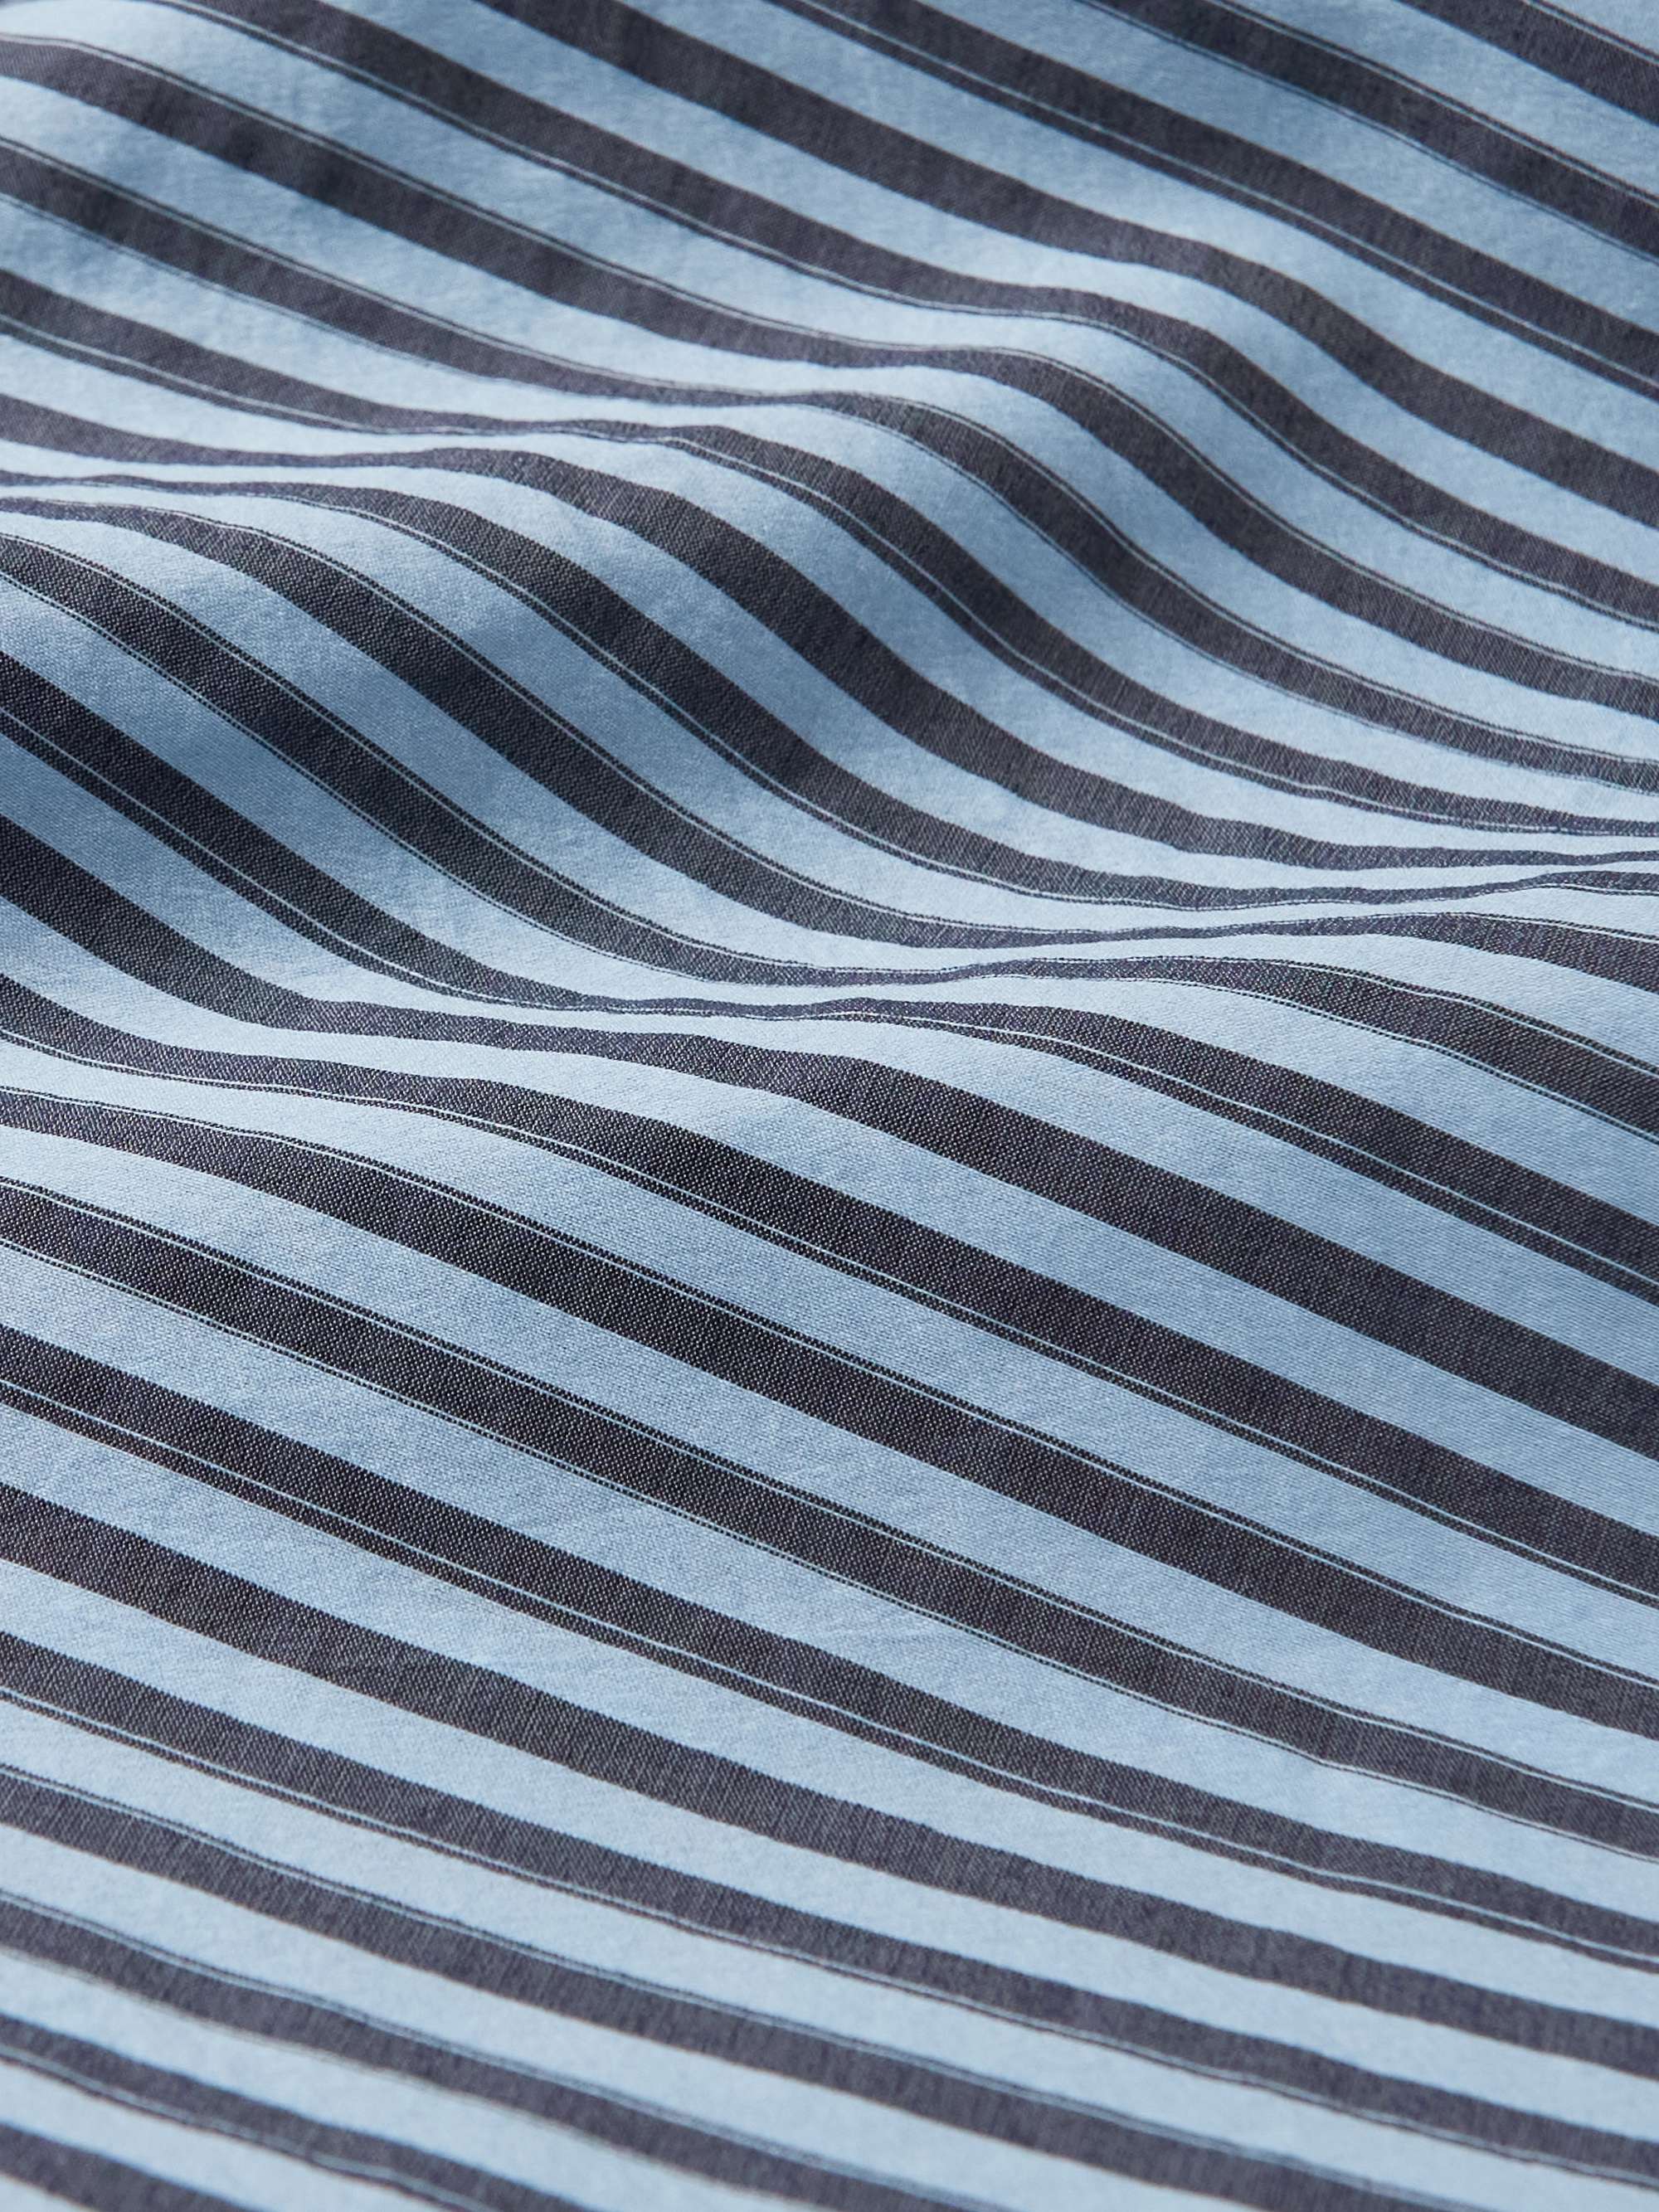 GIORGIO ARMANI Collarless Striped Cotton and Silk-Blend Shirt